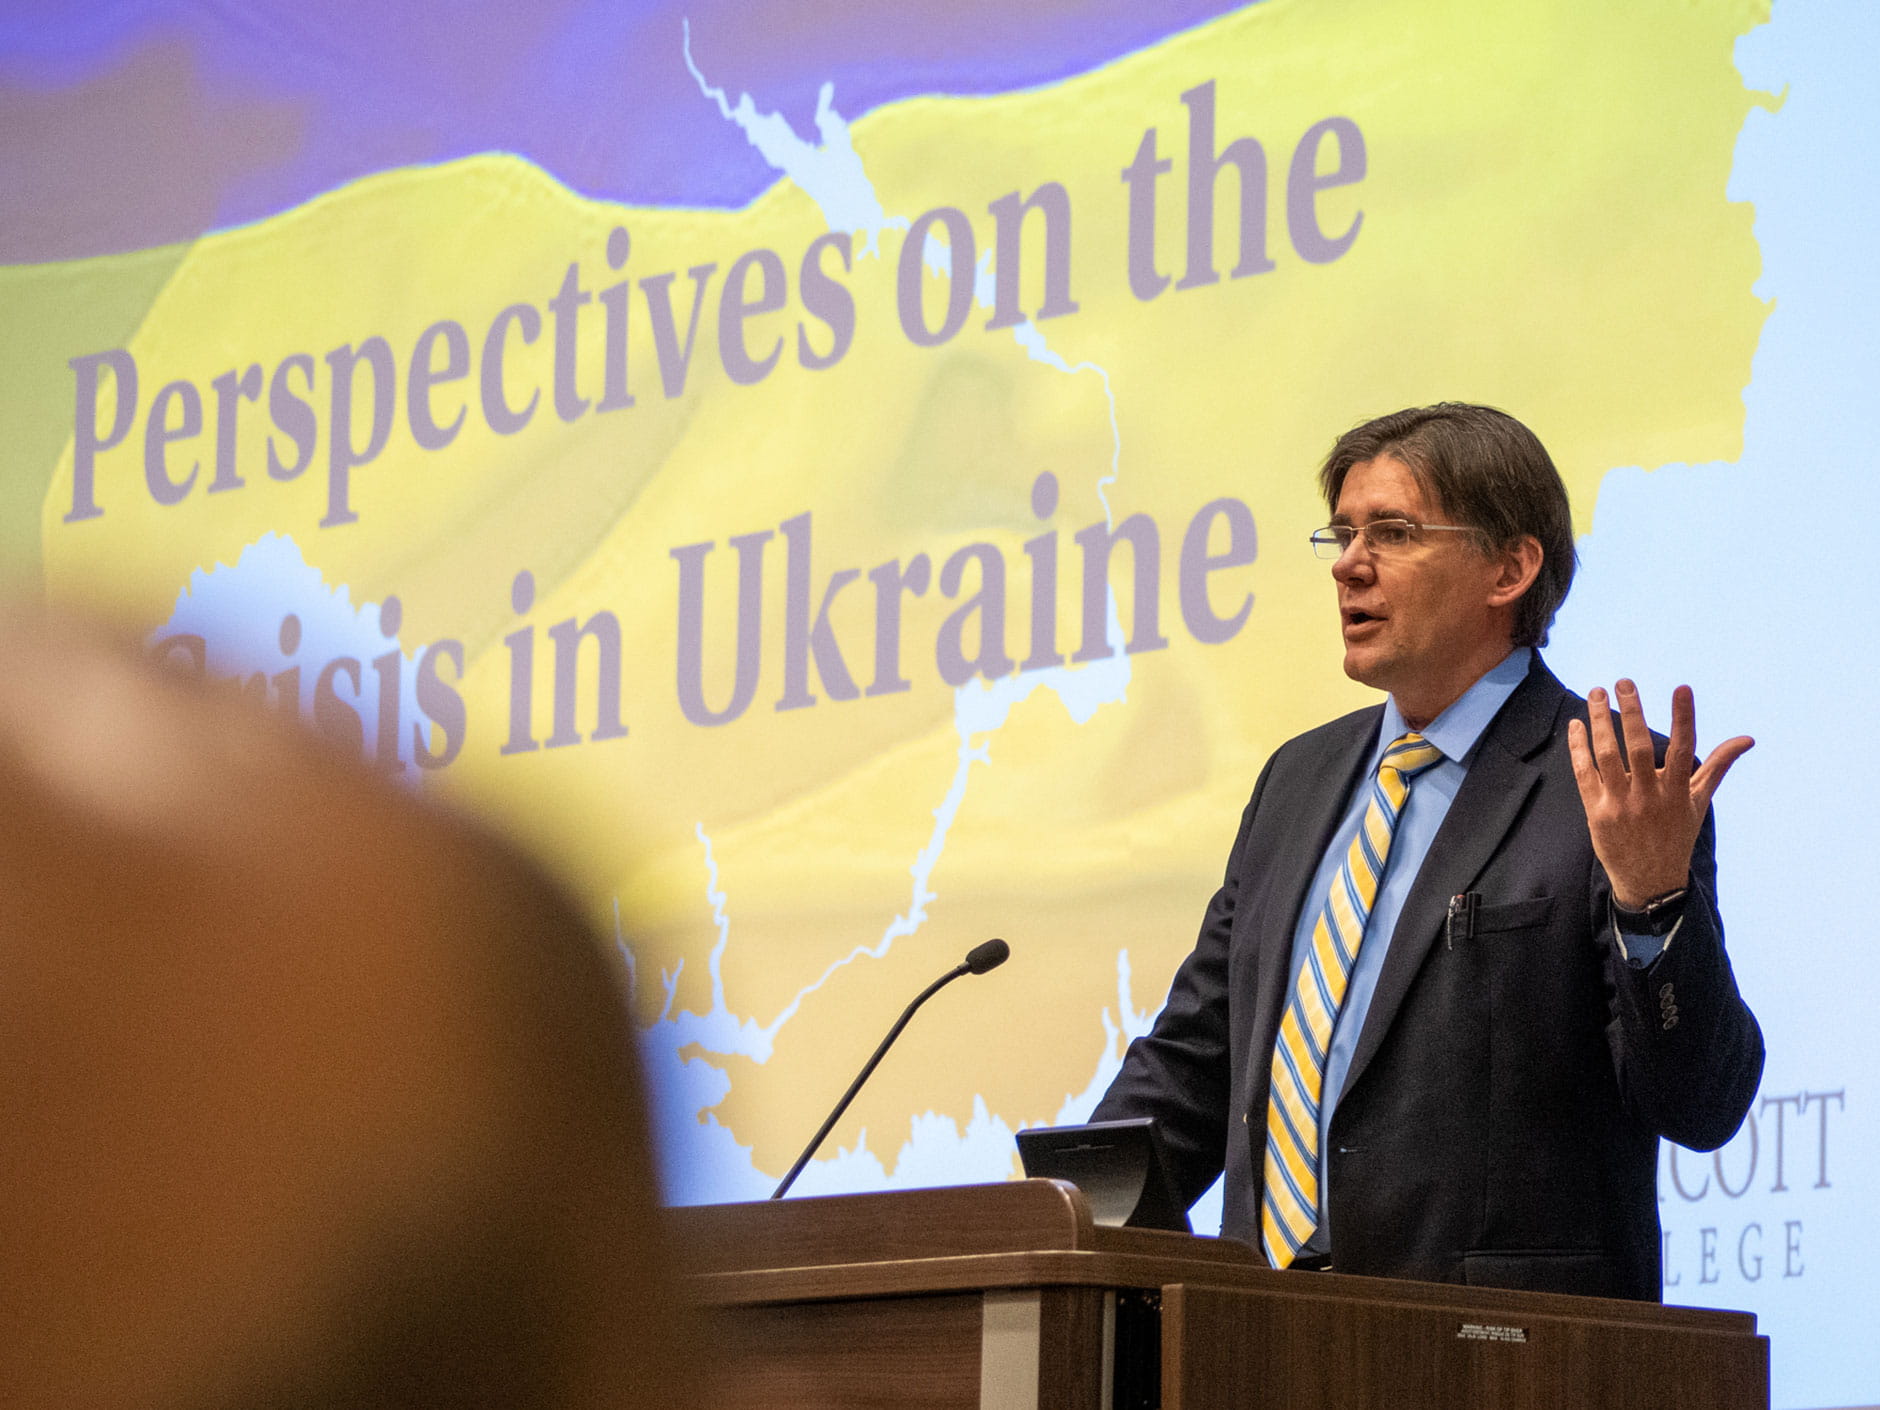 Dr. Vitaly Kozyrev, Professor of Political Science and International Studies